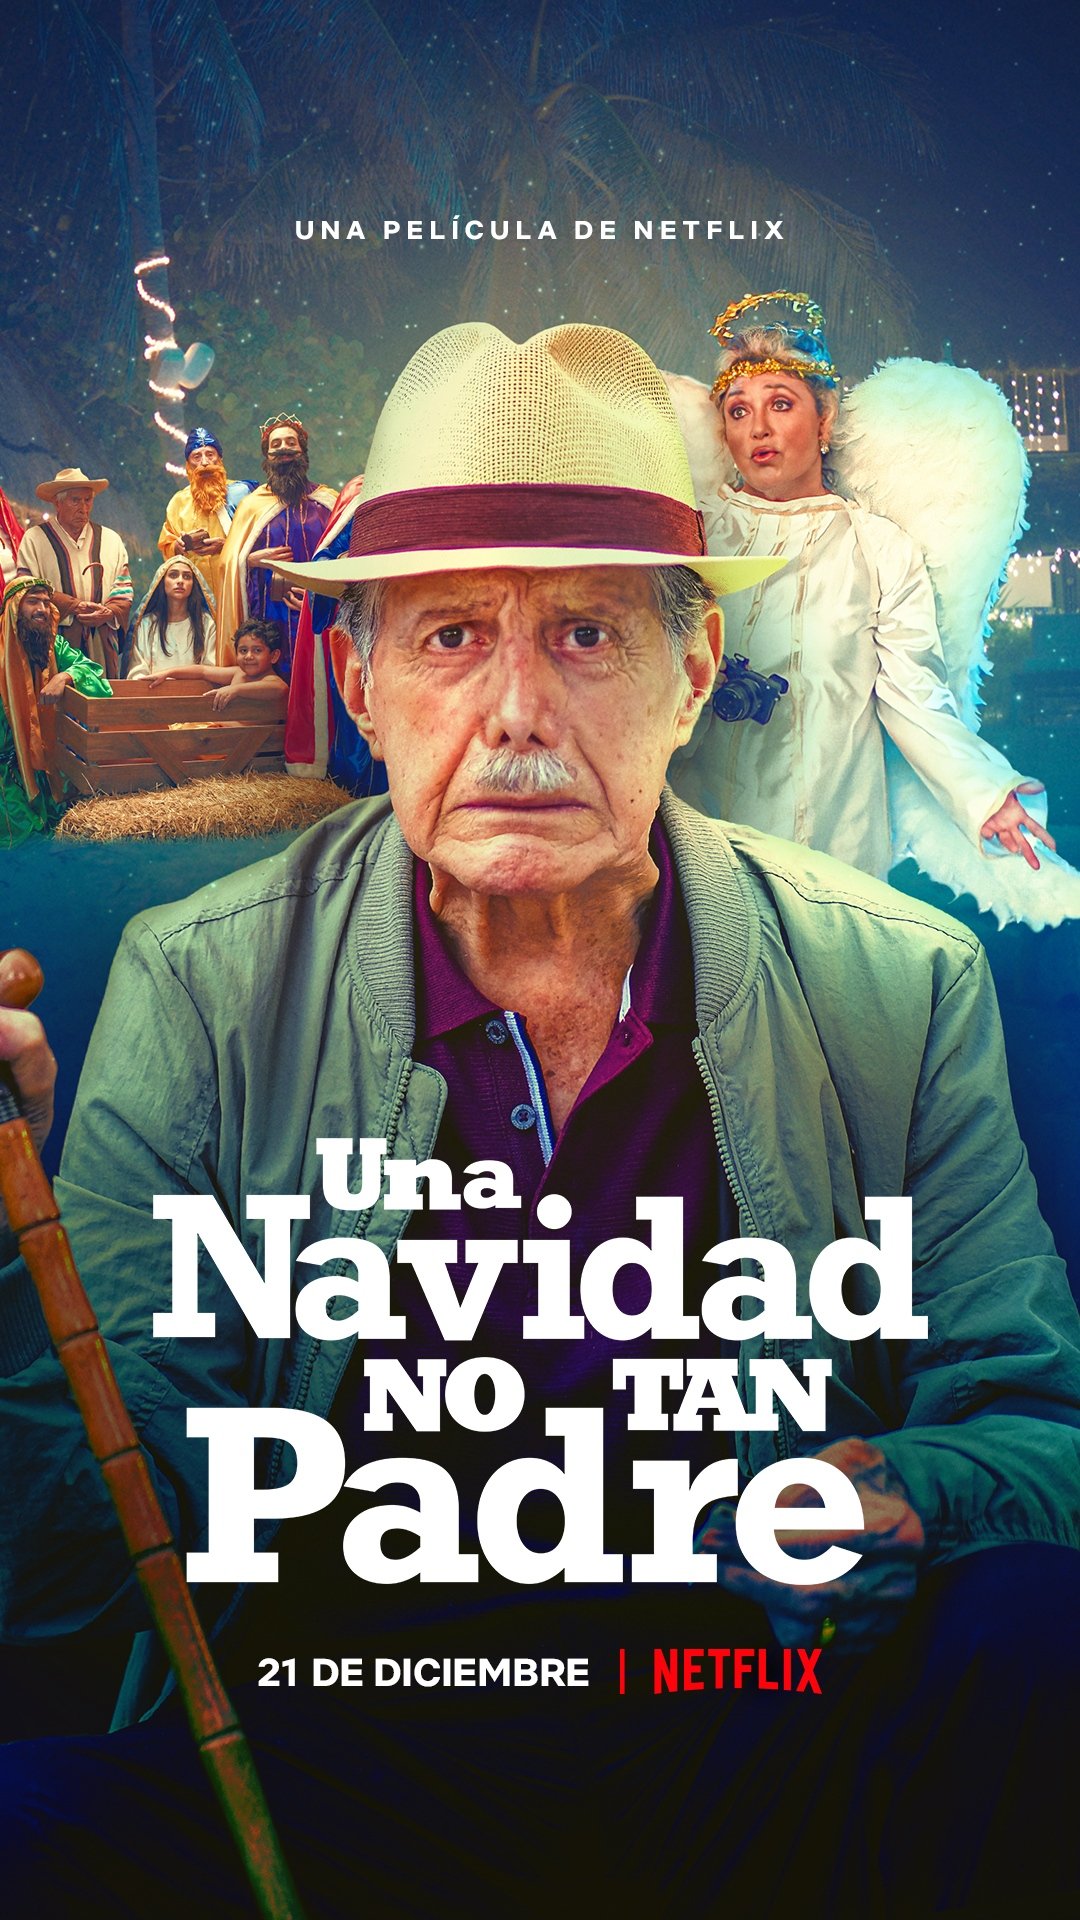 Spanish poster of the movie Una navidad no tan padre